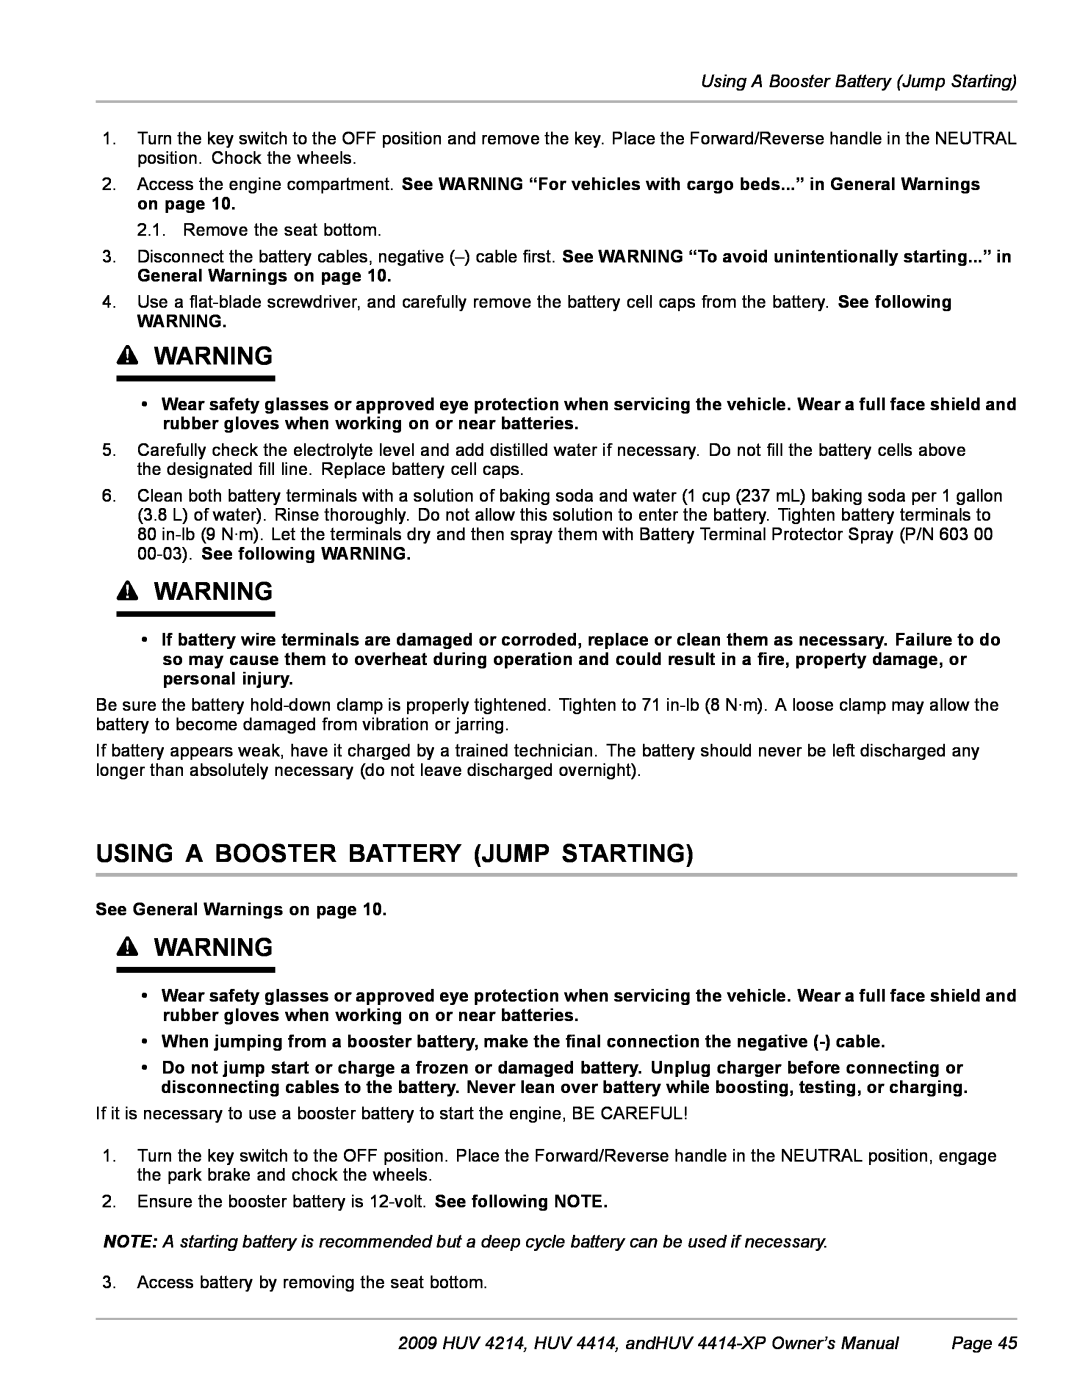 Husqvarna owner manual Using A Booster Battery Jump Starting, HUV 4214, HUV 4414, andHUV 4414-XP Owner’s Manual, Page 